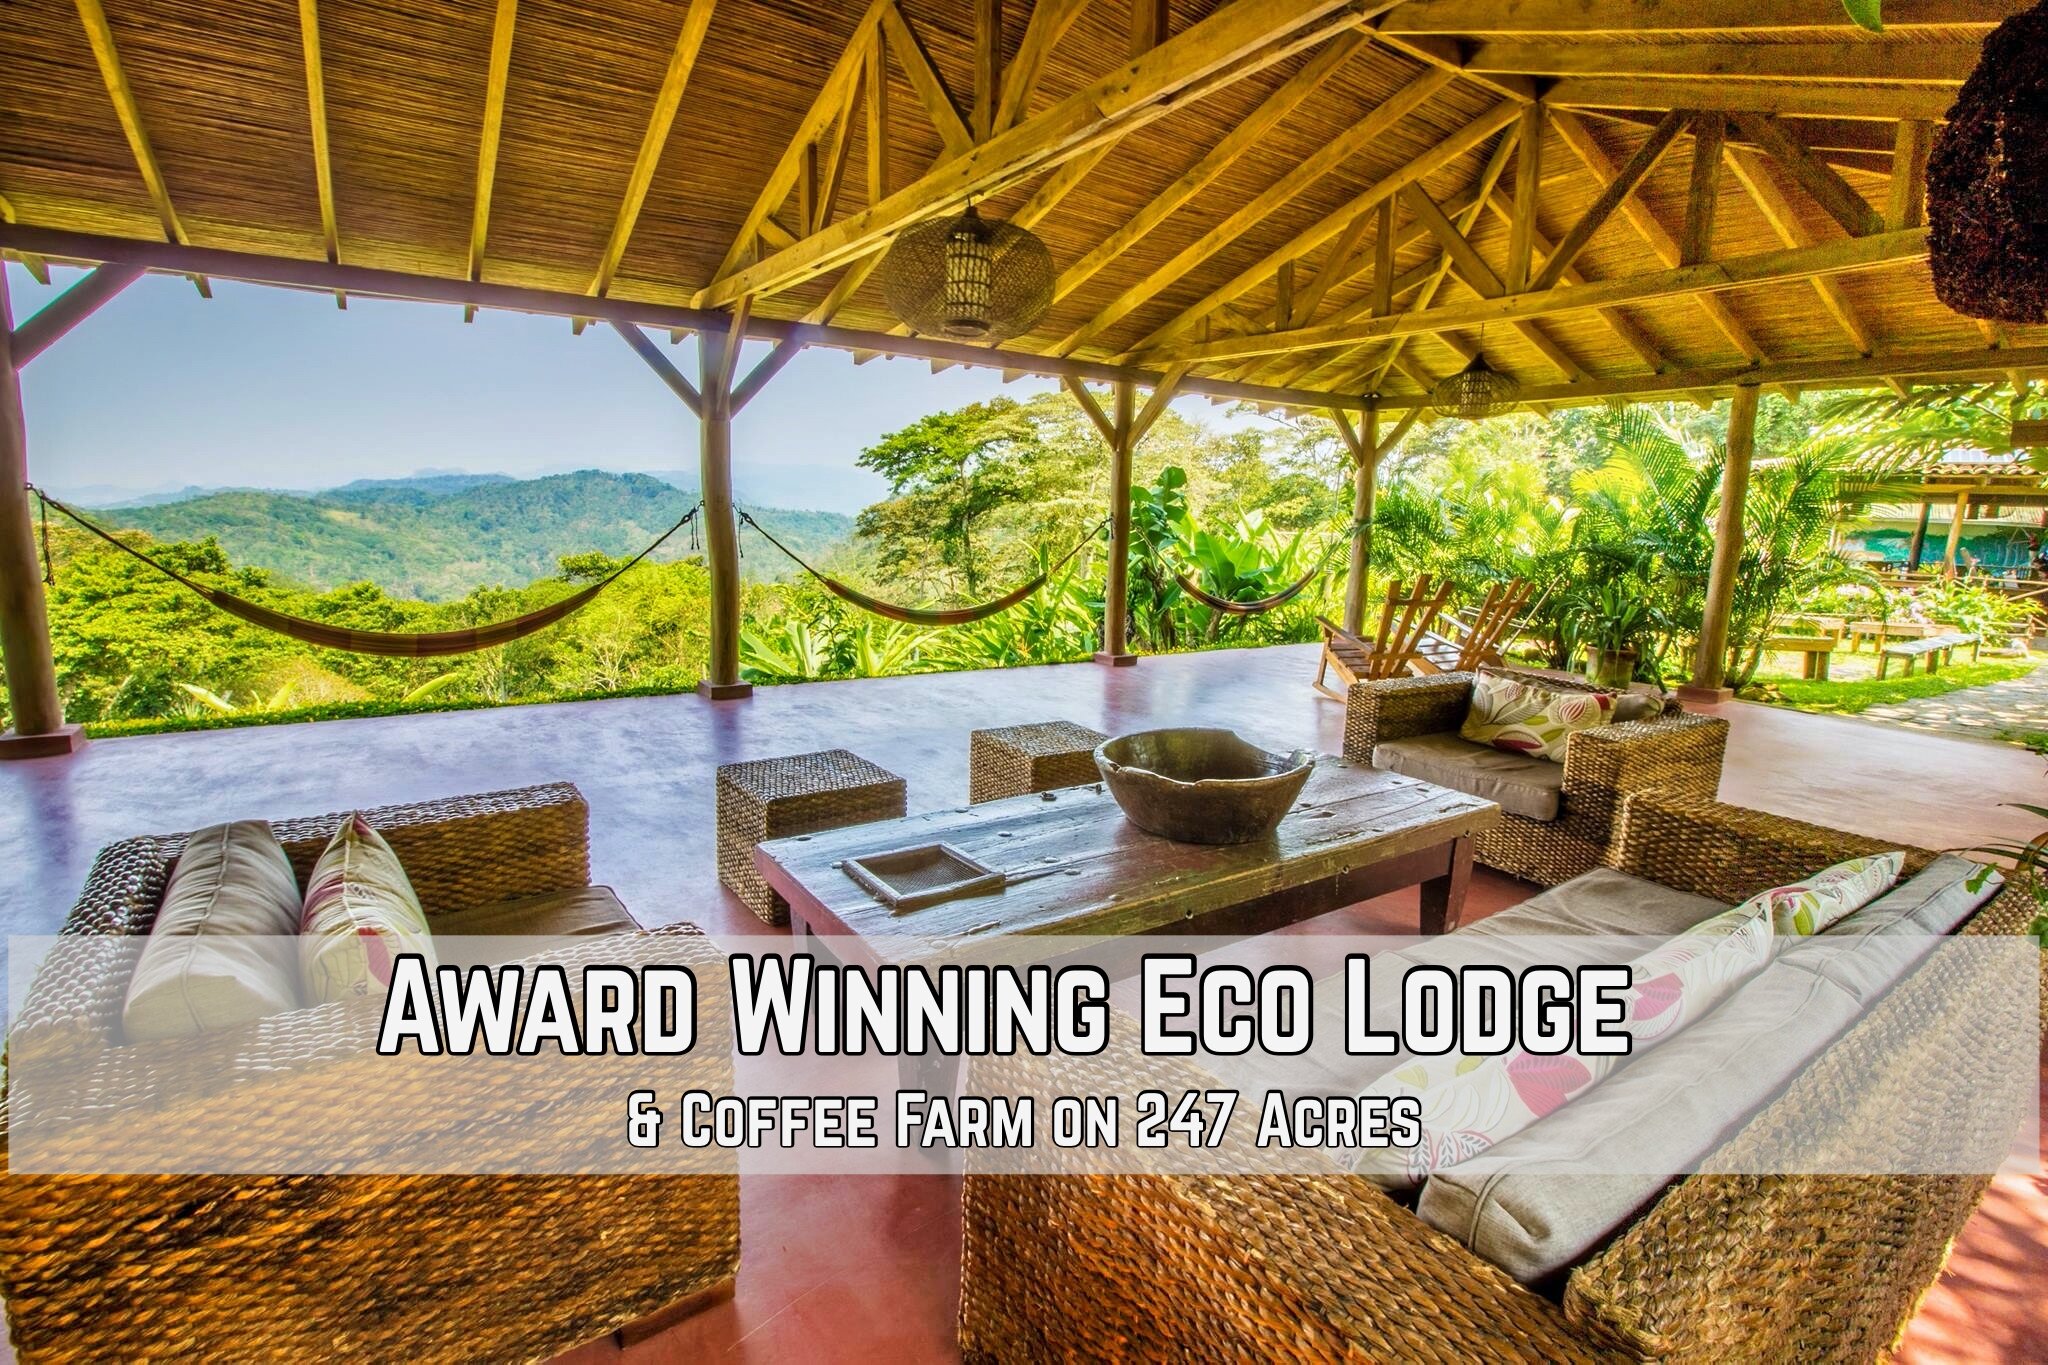 Property for Sale Nicaragua Sustainable Award Winning Eco Lodge With Coffee Farm 9.jpg